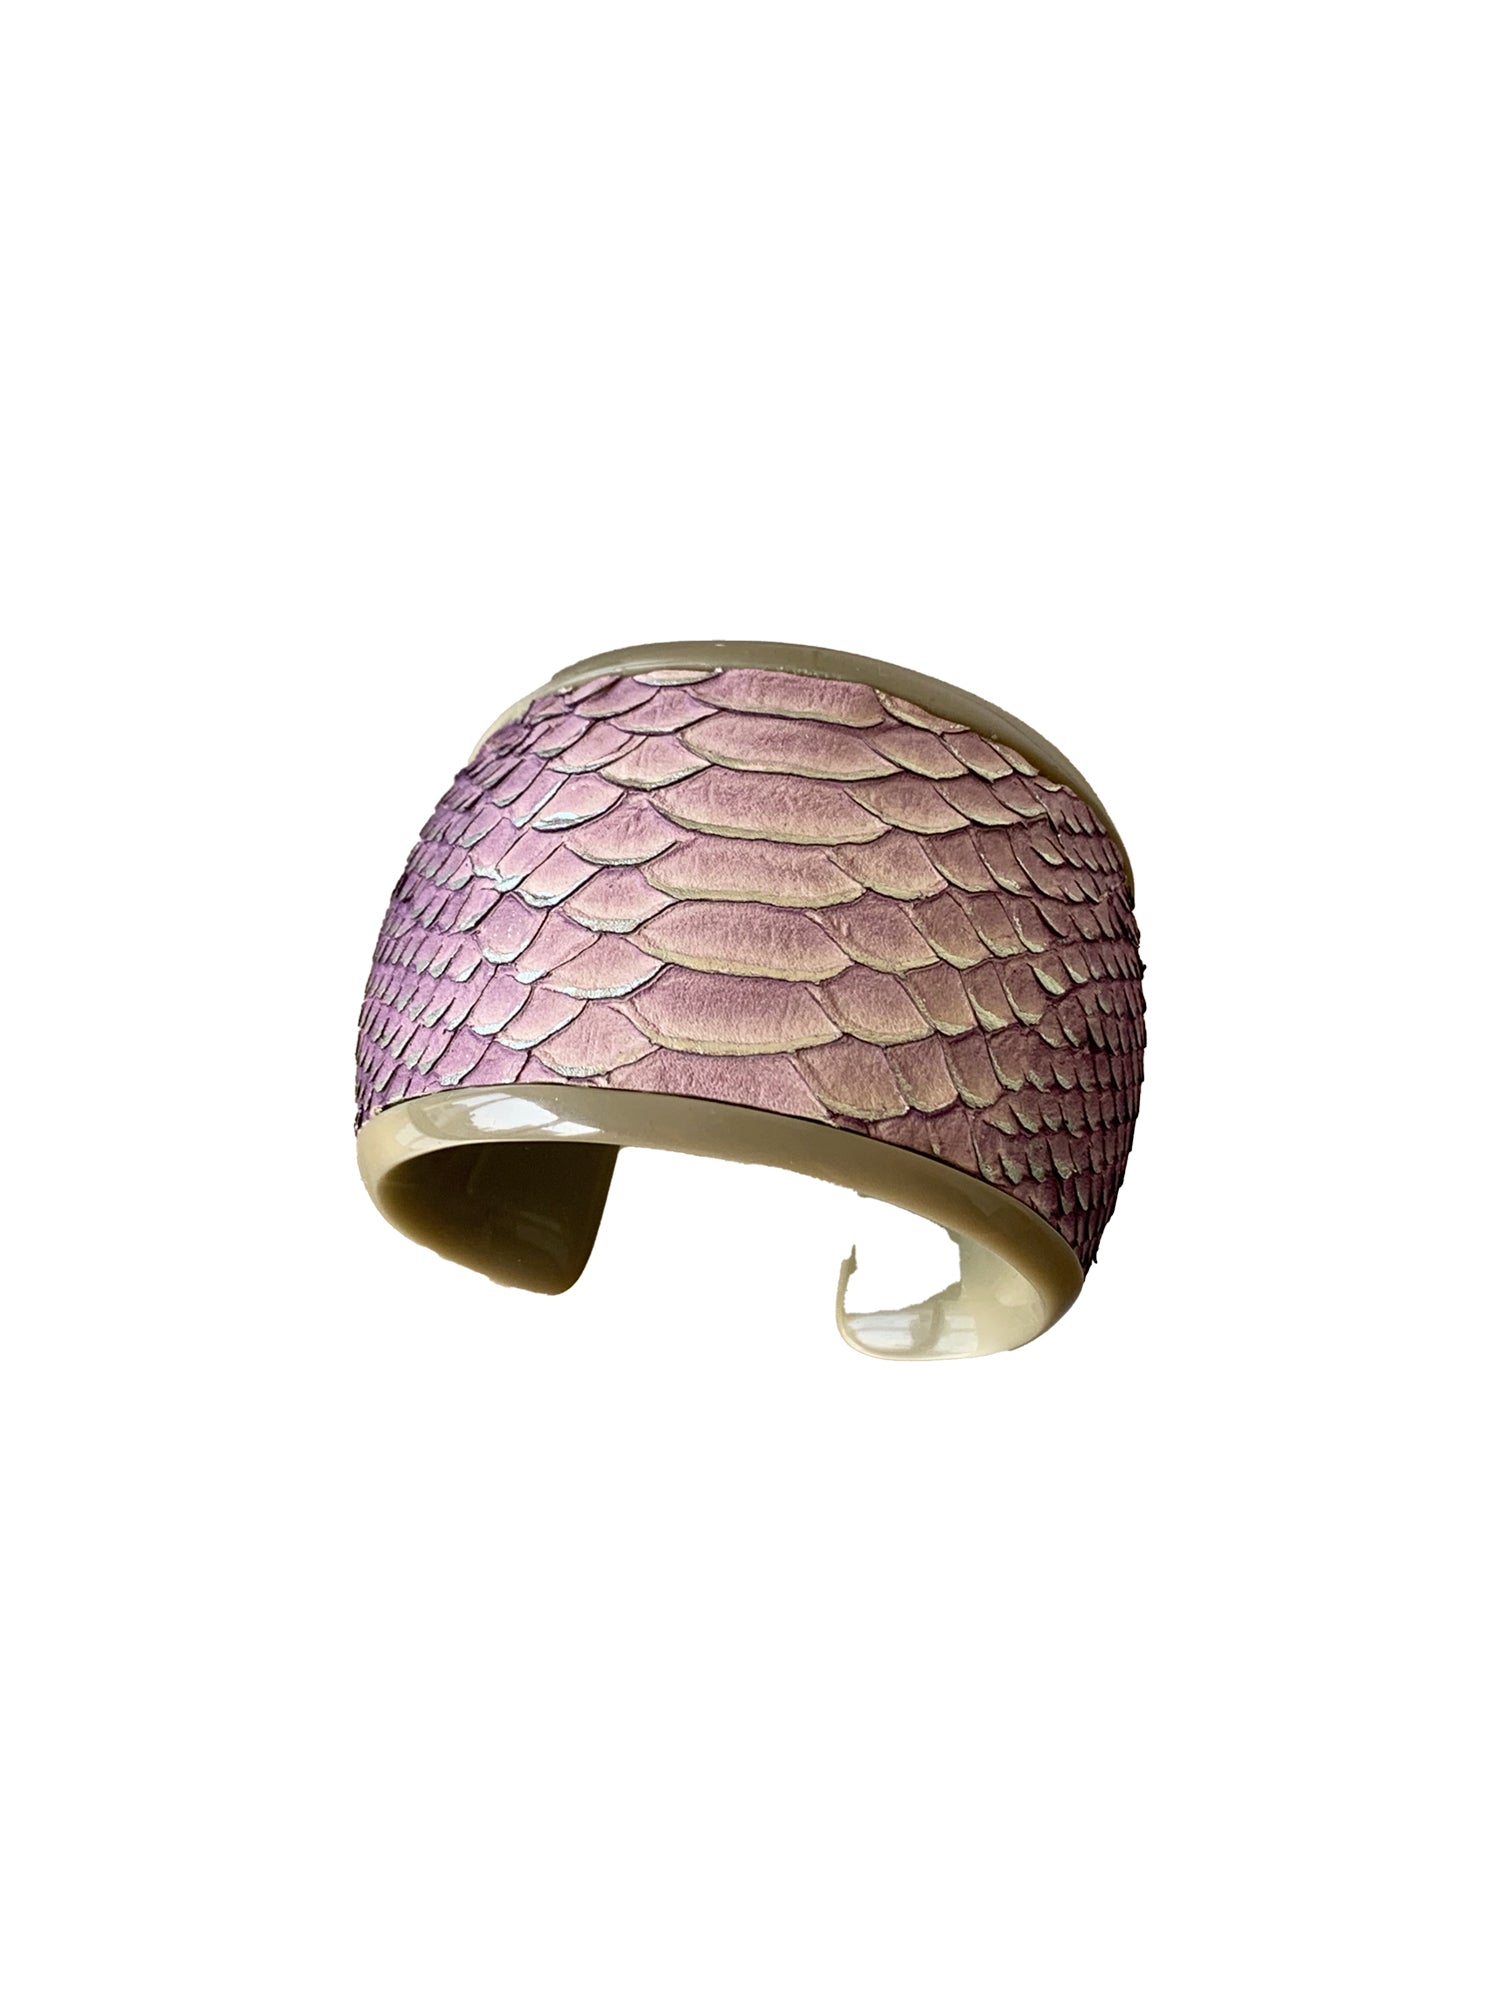 Resin Cuff Bracelet - Khaki / Purple